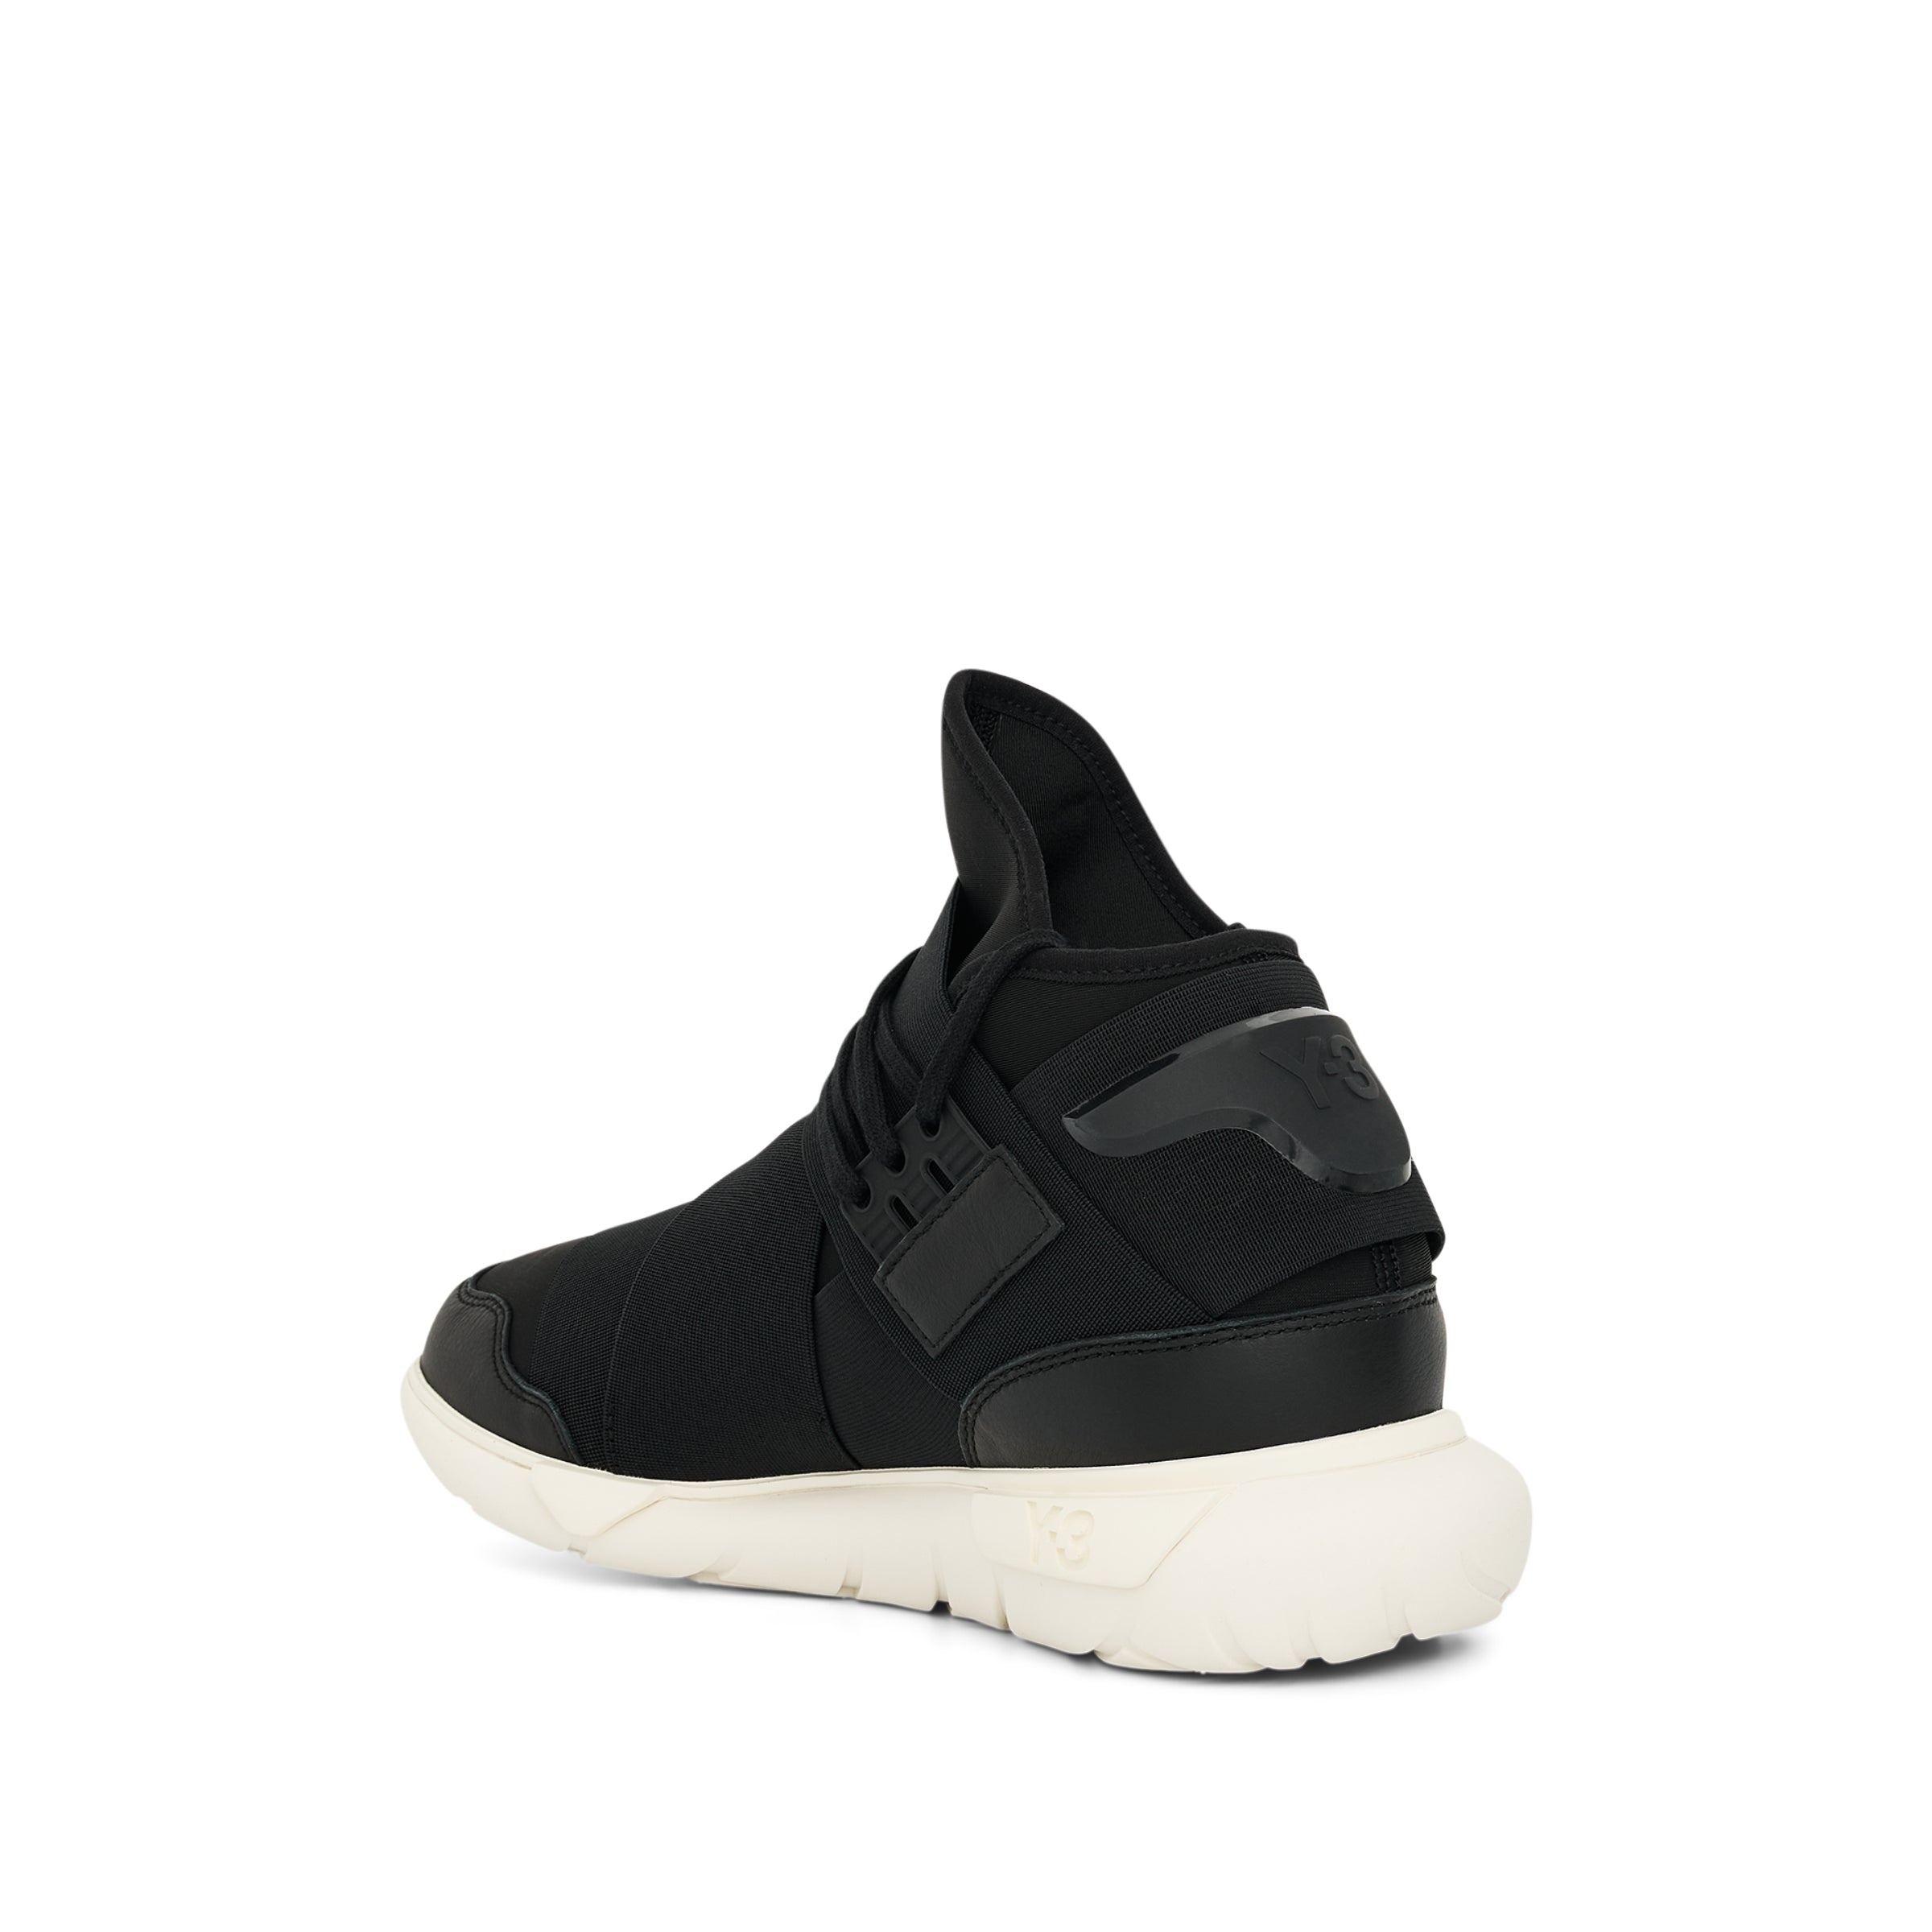 Qasa Sneaker in Black/Off White - 3